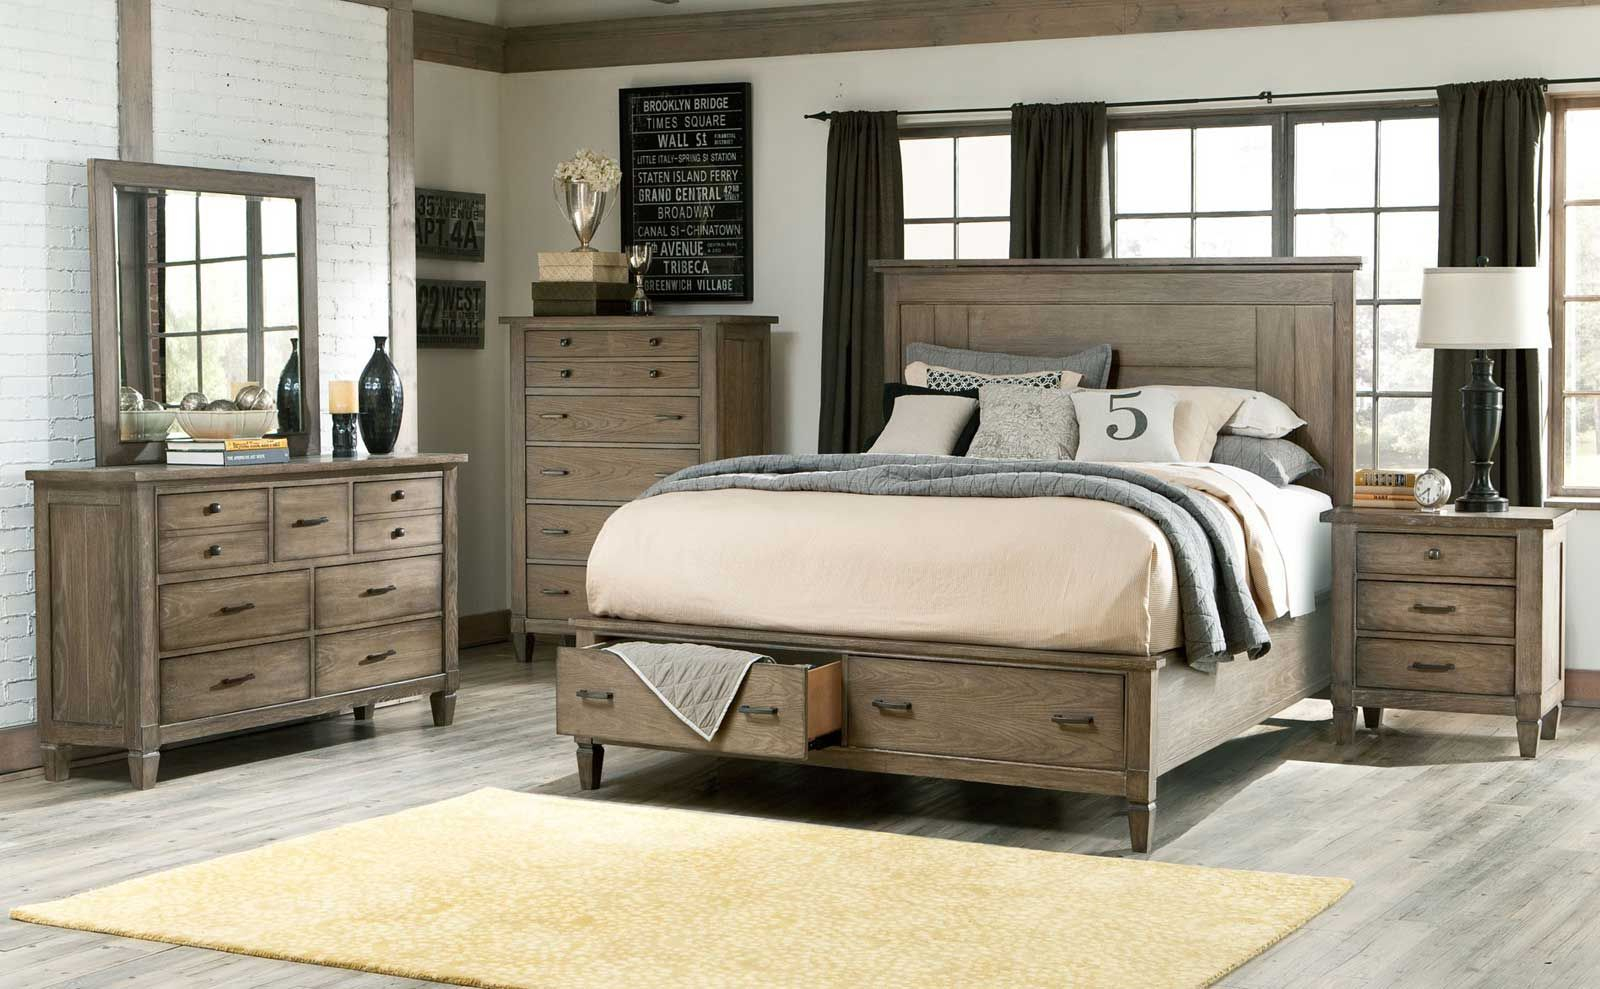 Modern Rustic Bedroom Furniture Sets Master Bed Room Rustic in measurements 1600 X 989